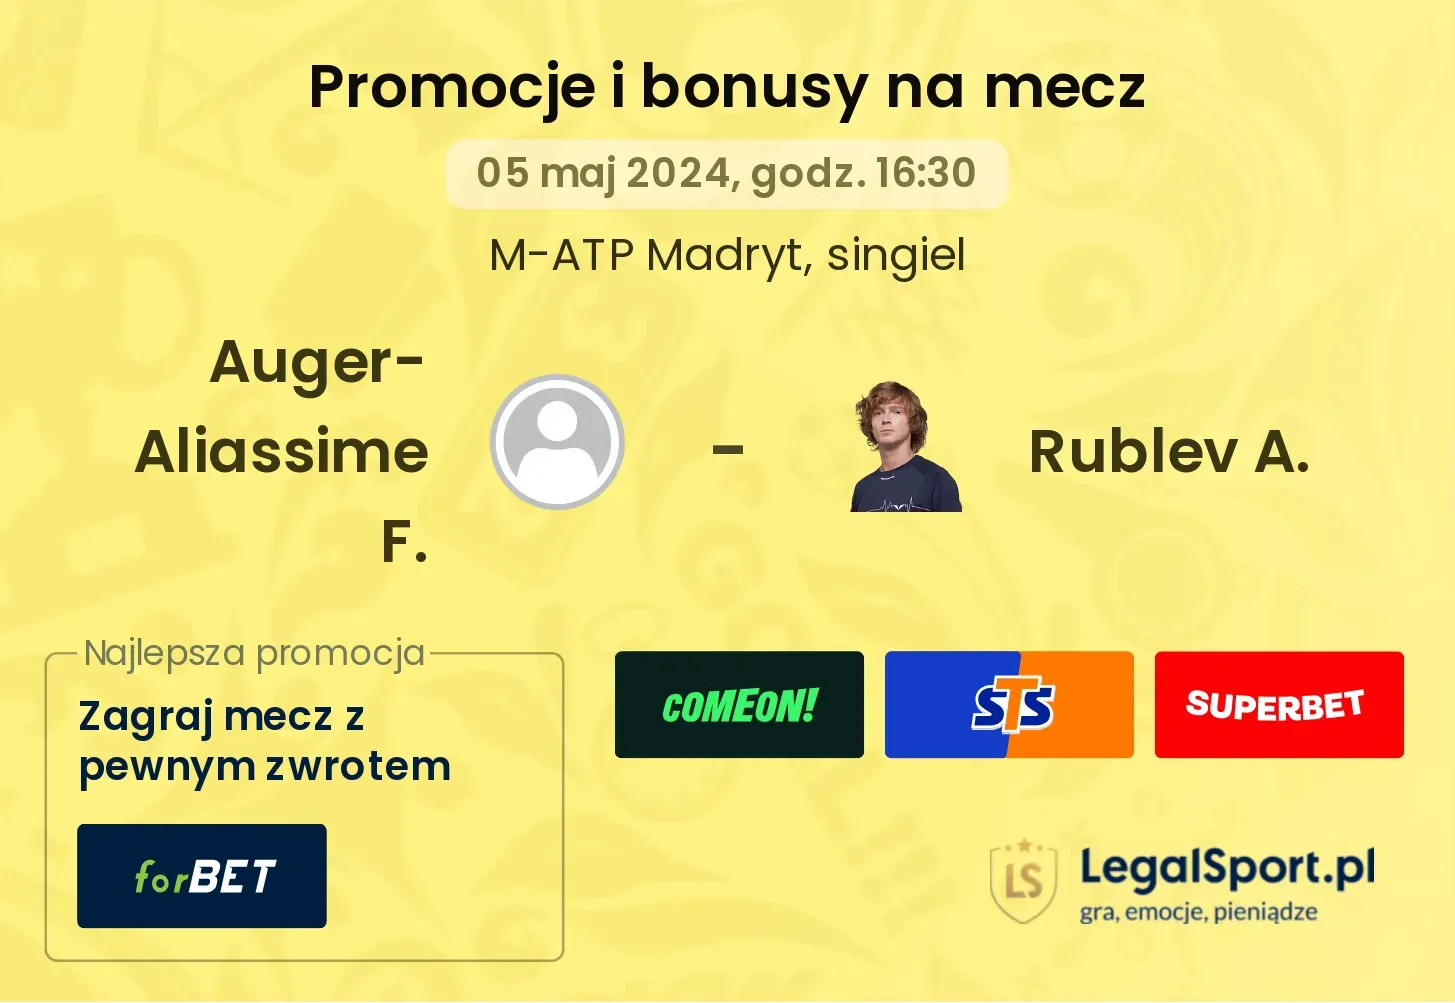 Auger-Aliassime F. - Rublev A. promocje bonusy na mecz